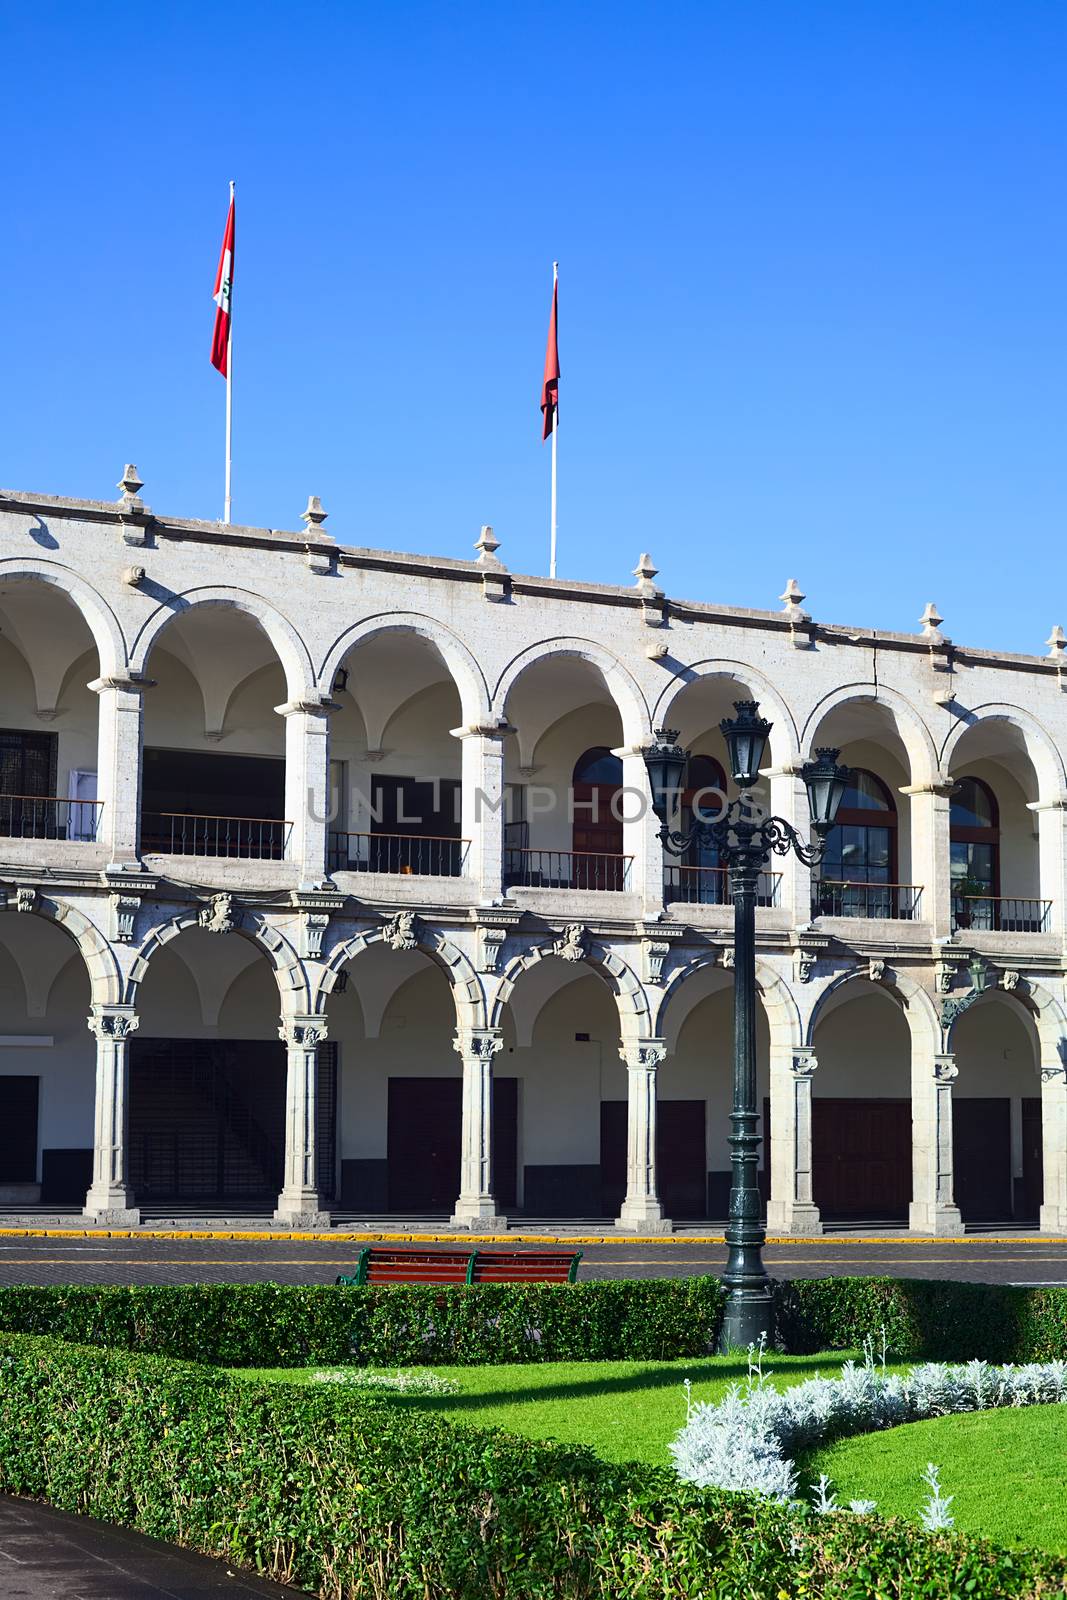 City Hall of Arequipa, Peru by sven